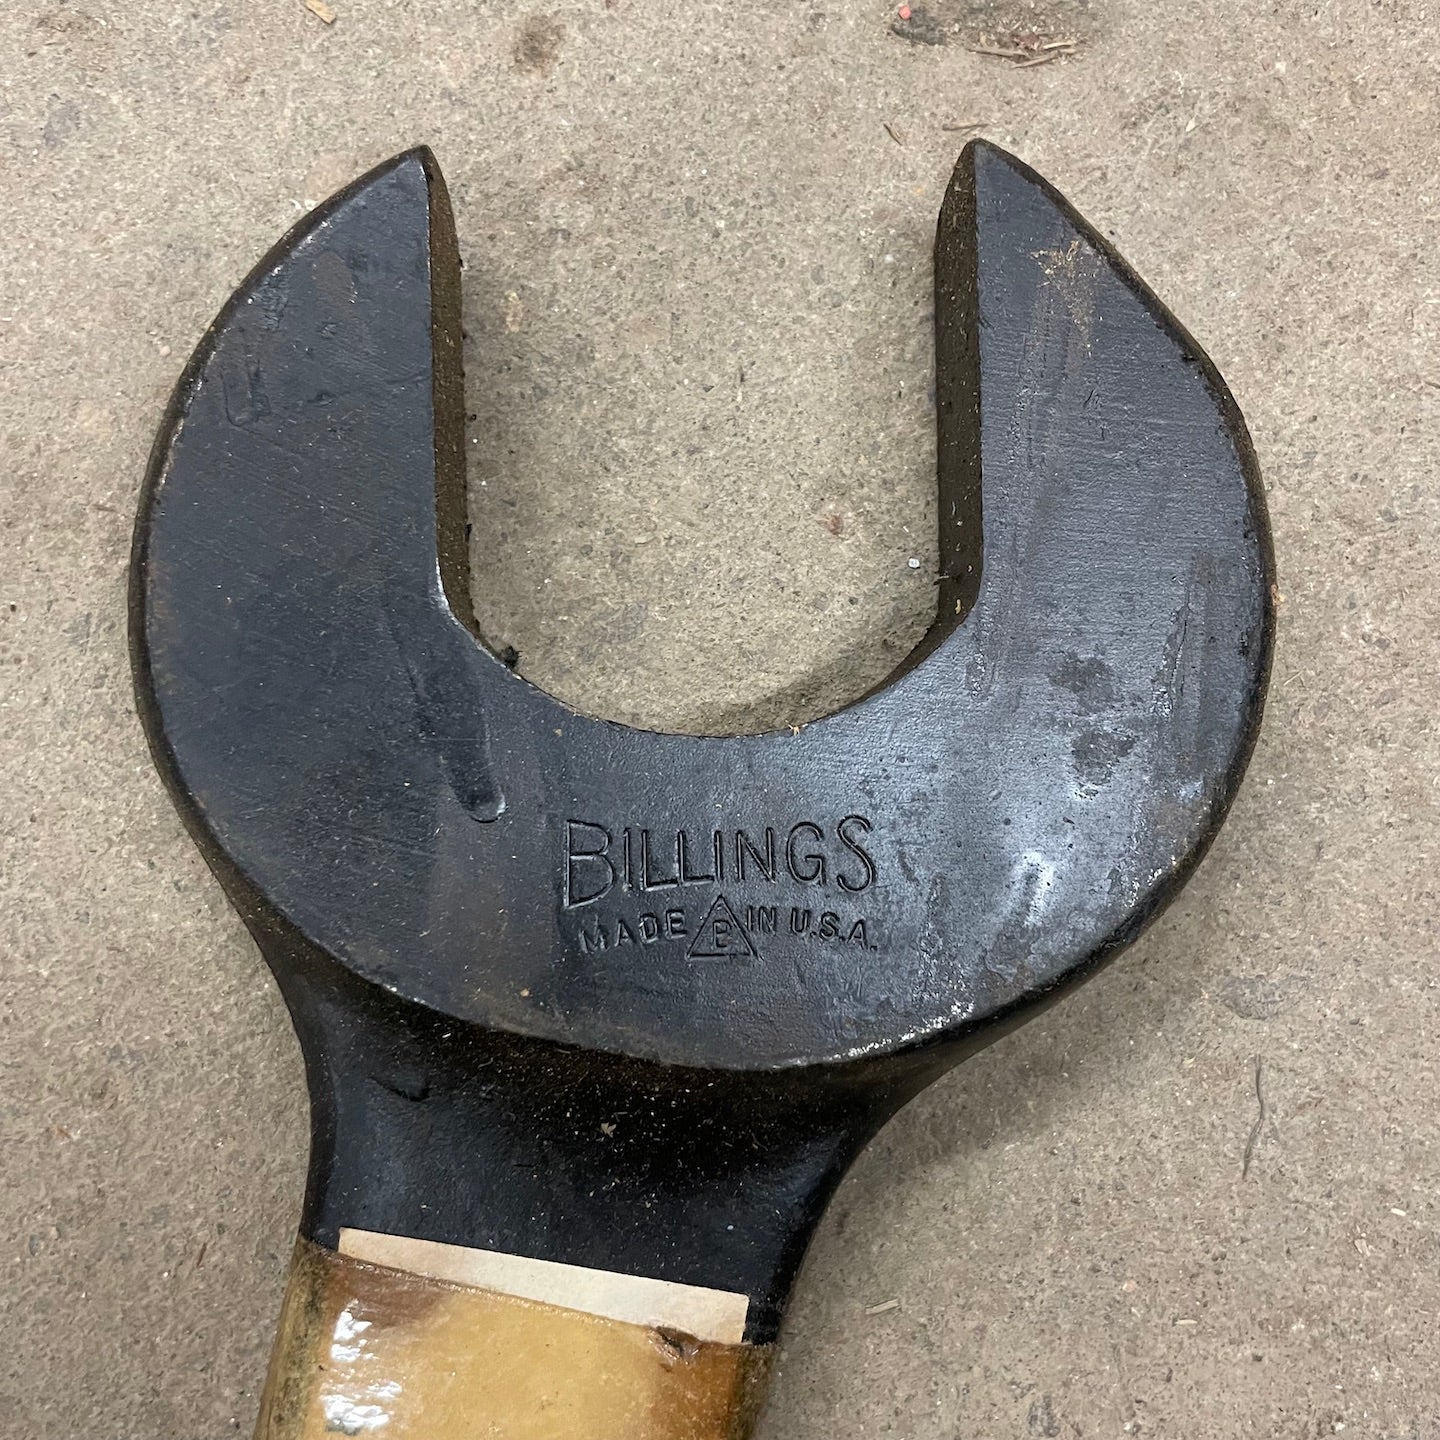 NOS WWII Era 2 1/4" Open End Billings Wrench